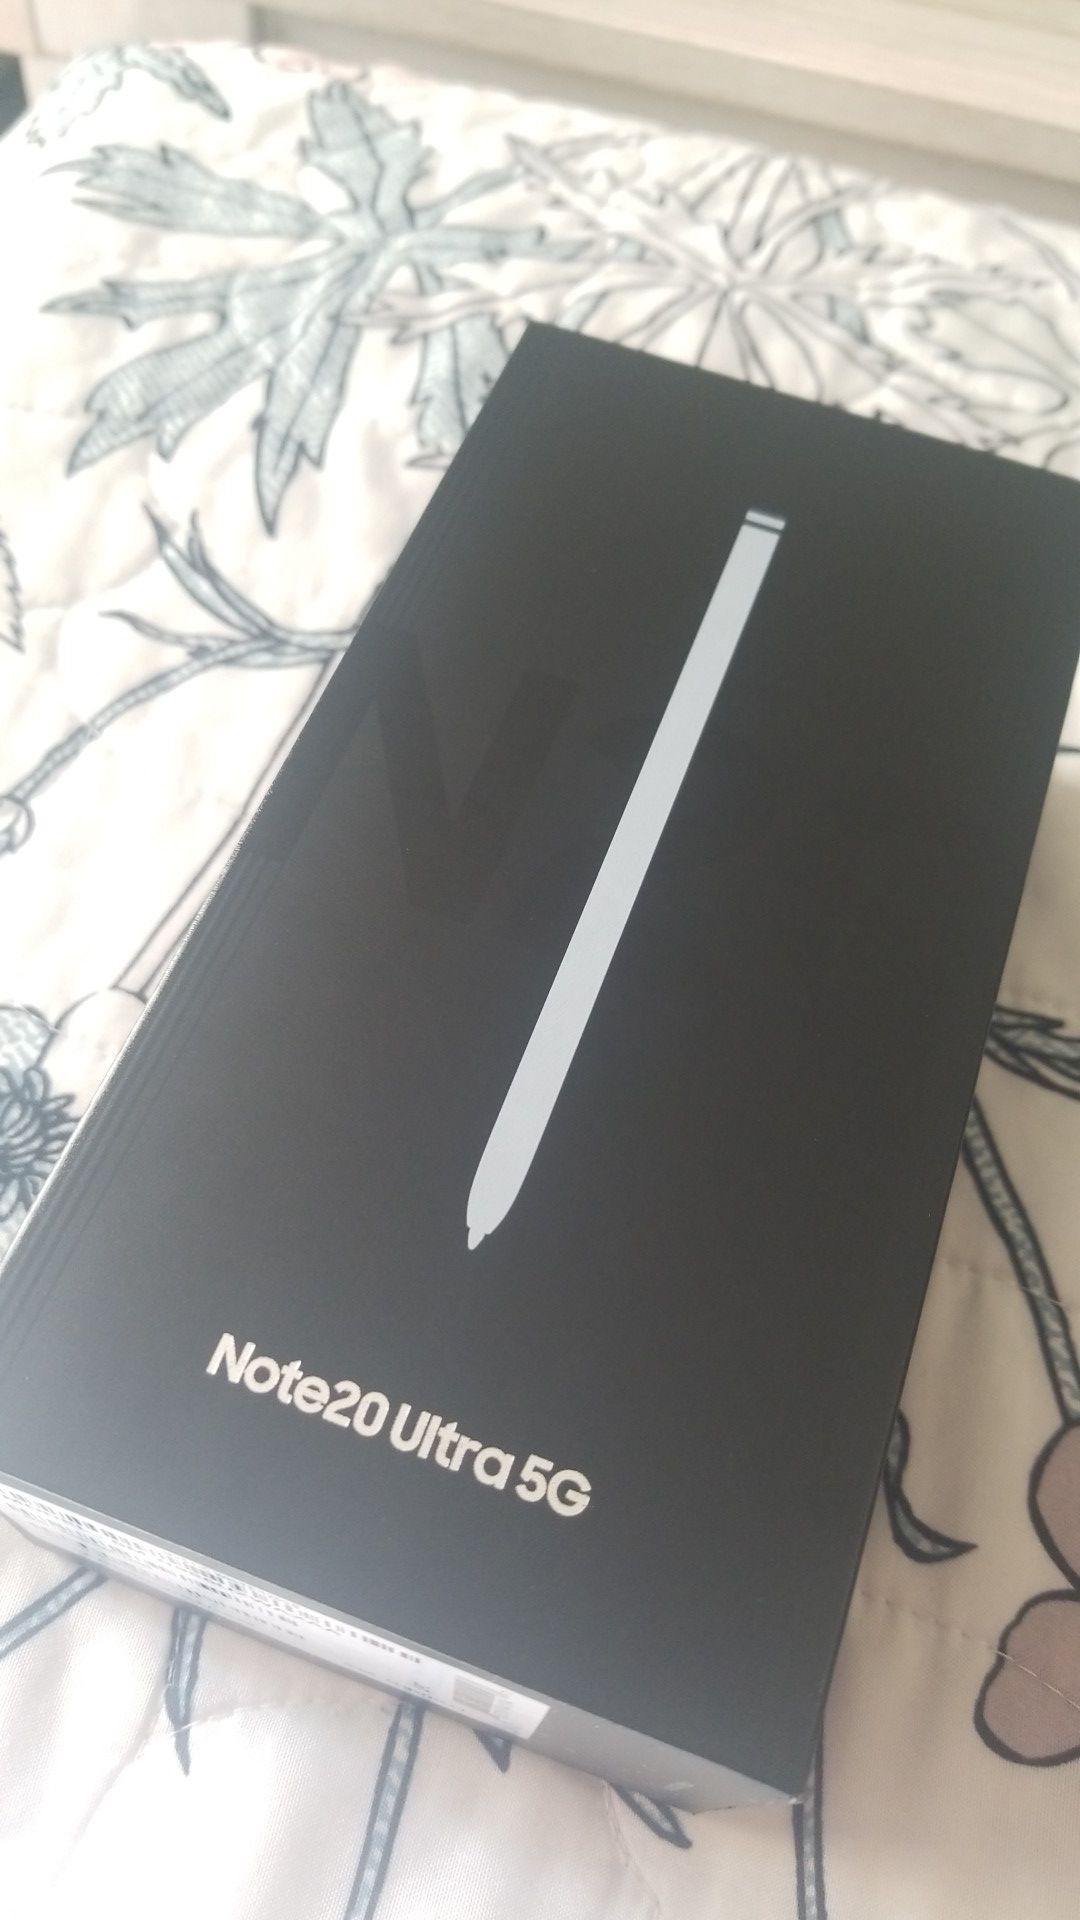 Galaxy Note 20 ultra 5G unlocked